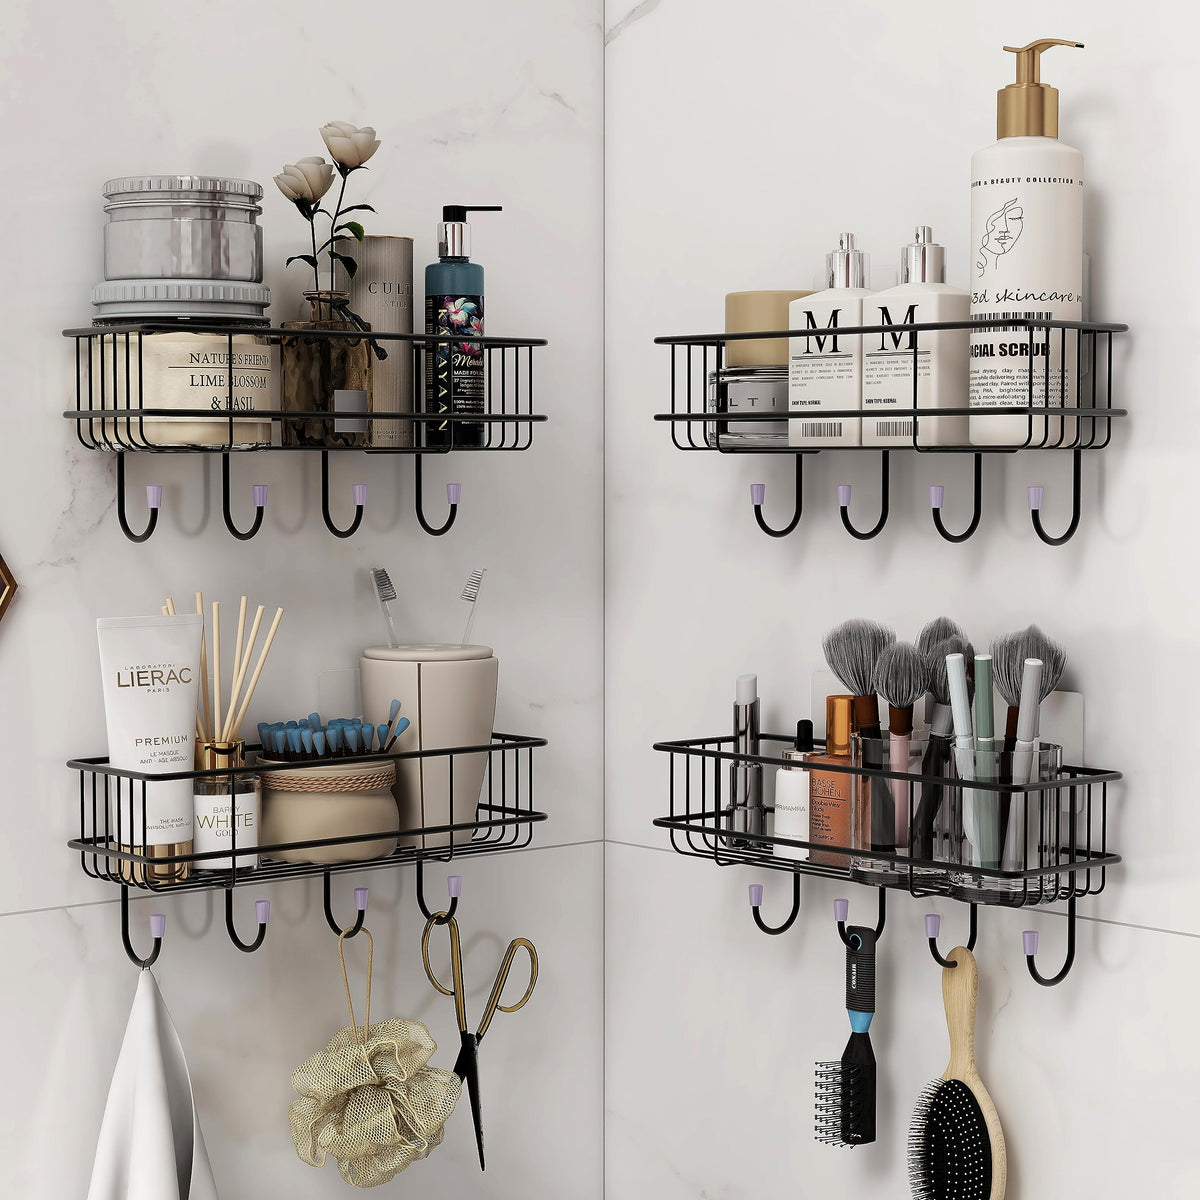 Plantex GI Steel Self-Adhesive Multipurpose Bathroom Shelf with Hooks/Towel Holder/Rack/Bathroom Accessories - Wall Mount - Pack of 4 (Black,Powder Coated)